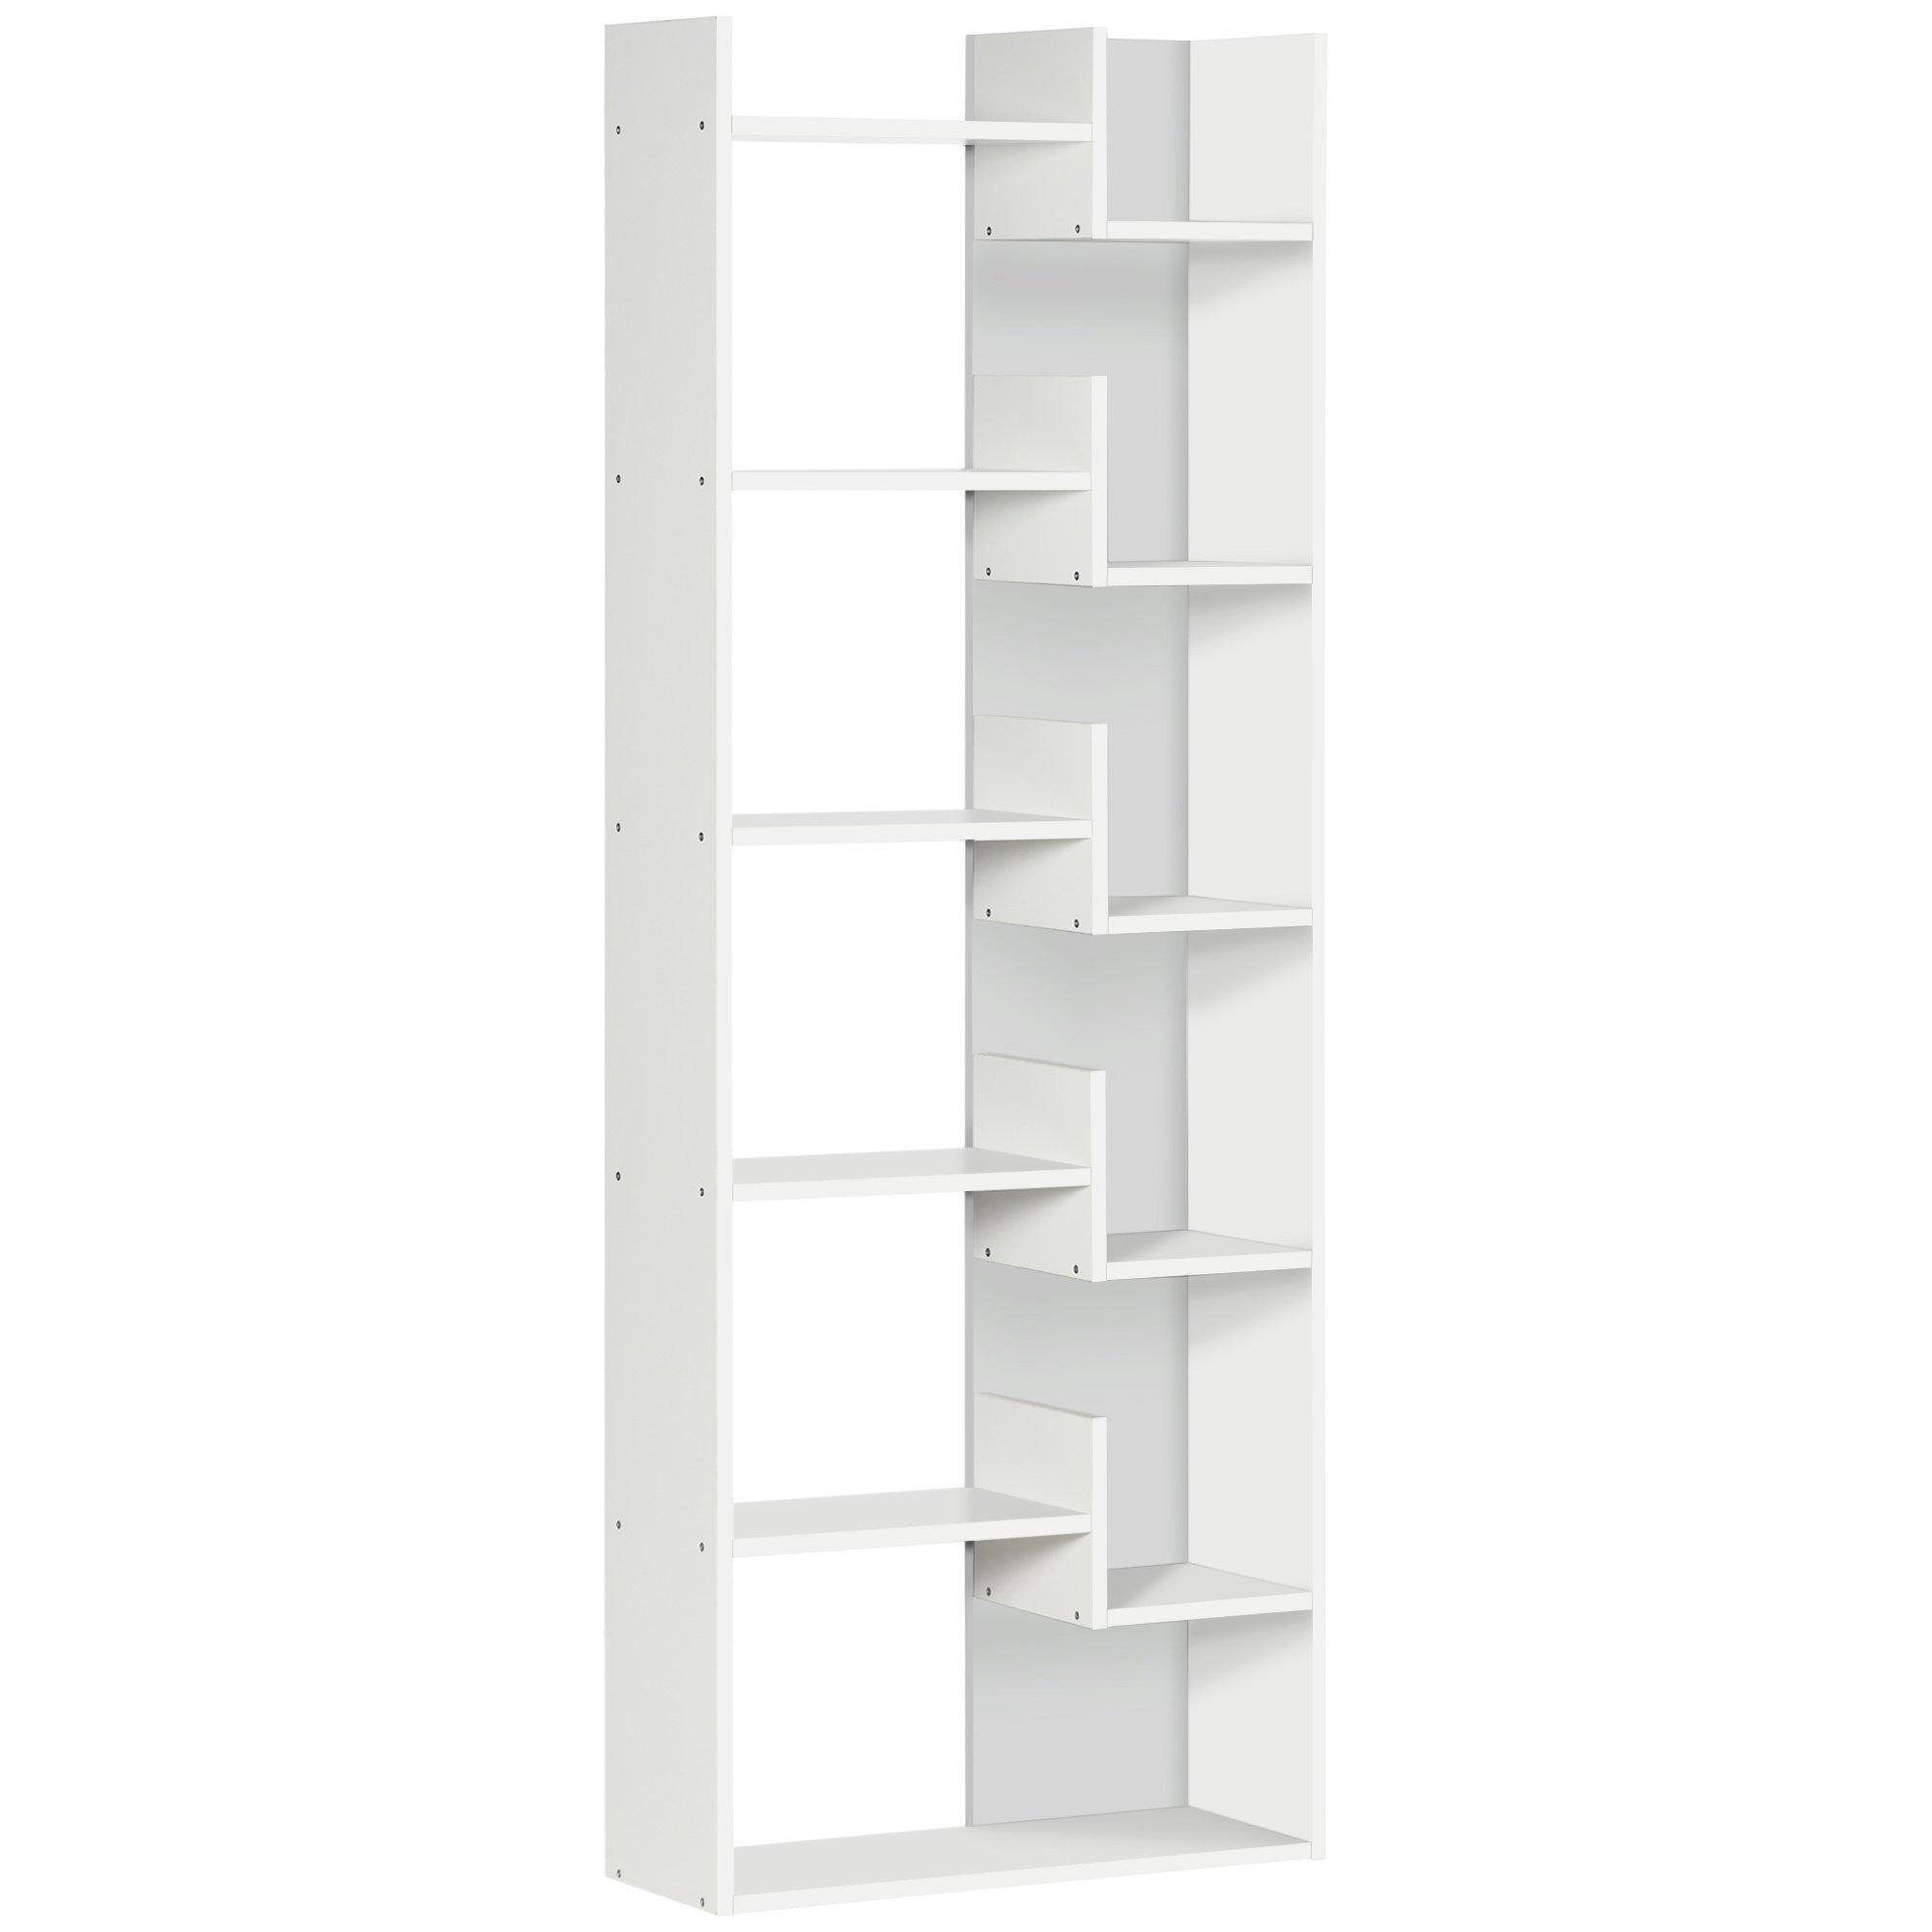 6 Tier Bookshelf Modern Bookcase with 11 Open Shelves - image 1